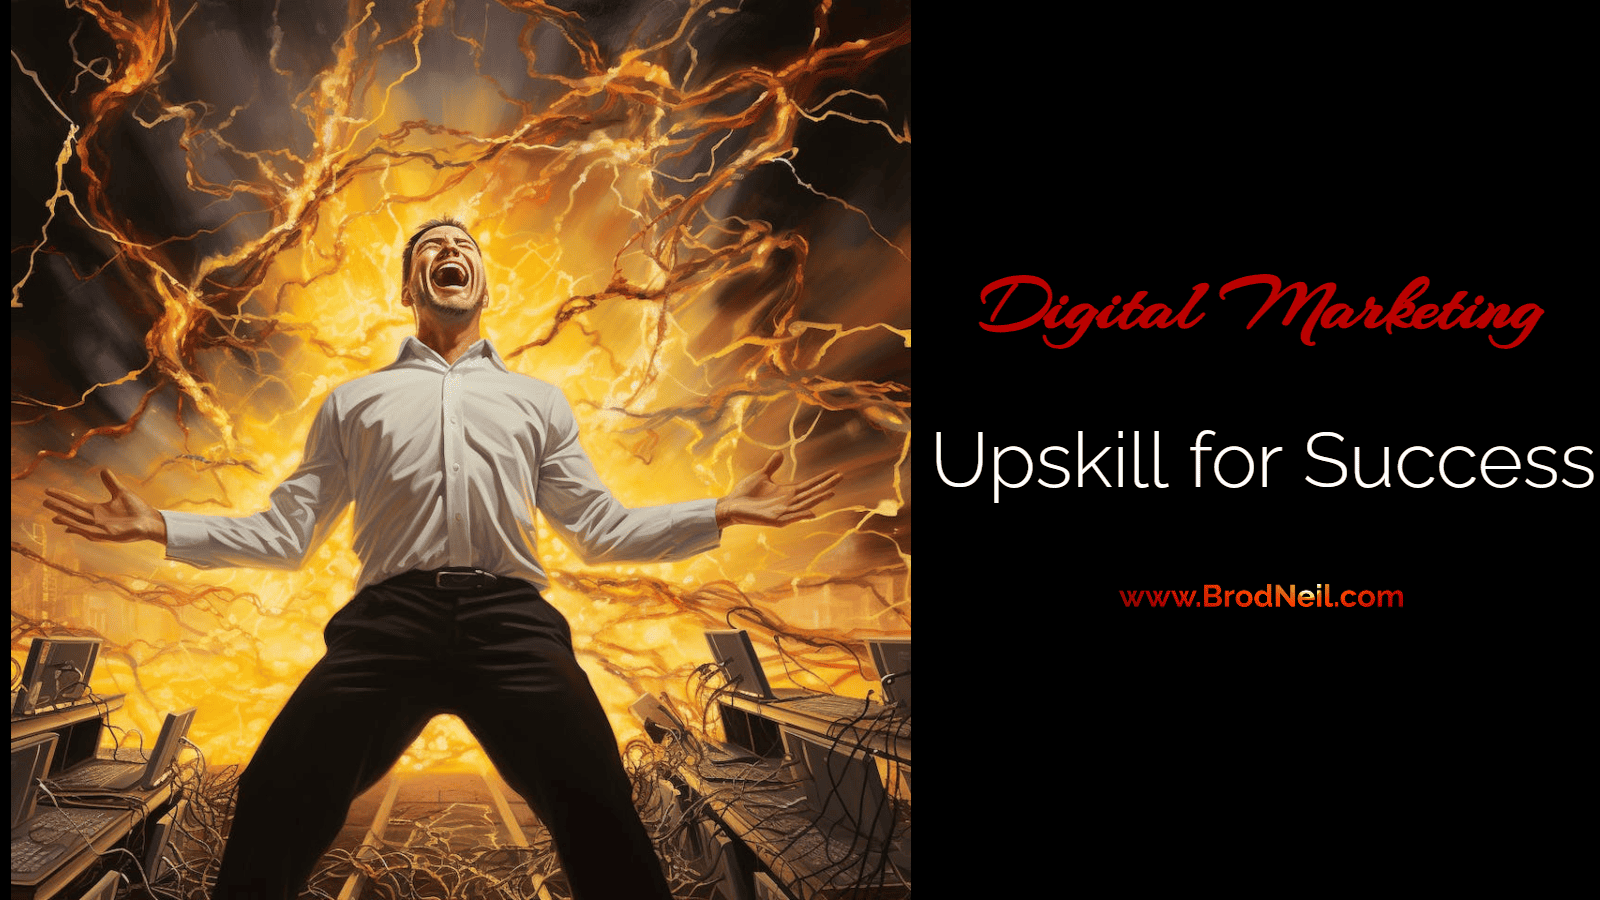 Upskill for Success in Digital Marketing